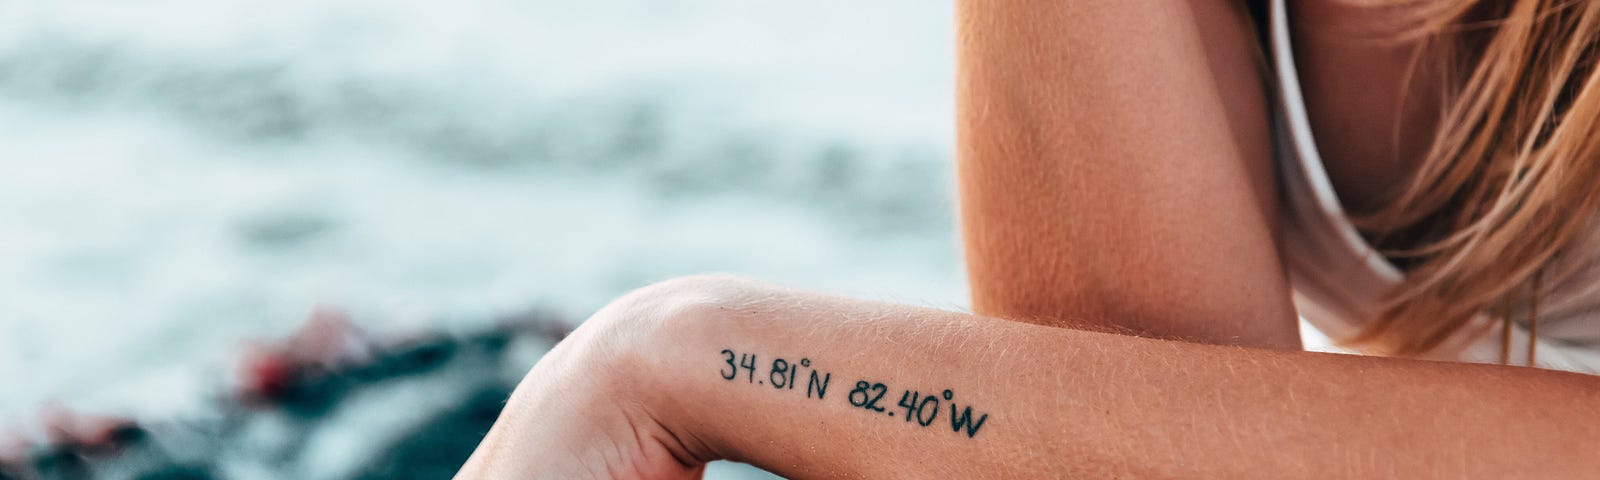 Coordinates written on a girl’s arm